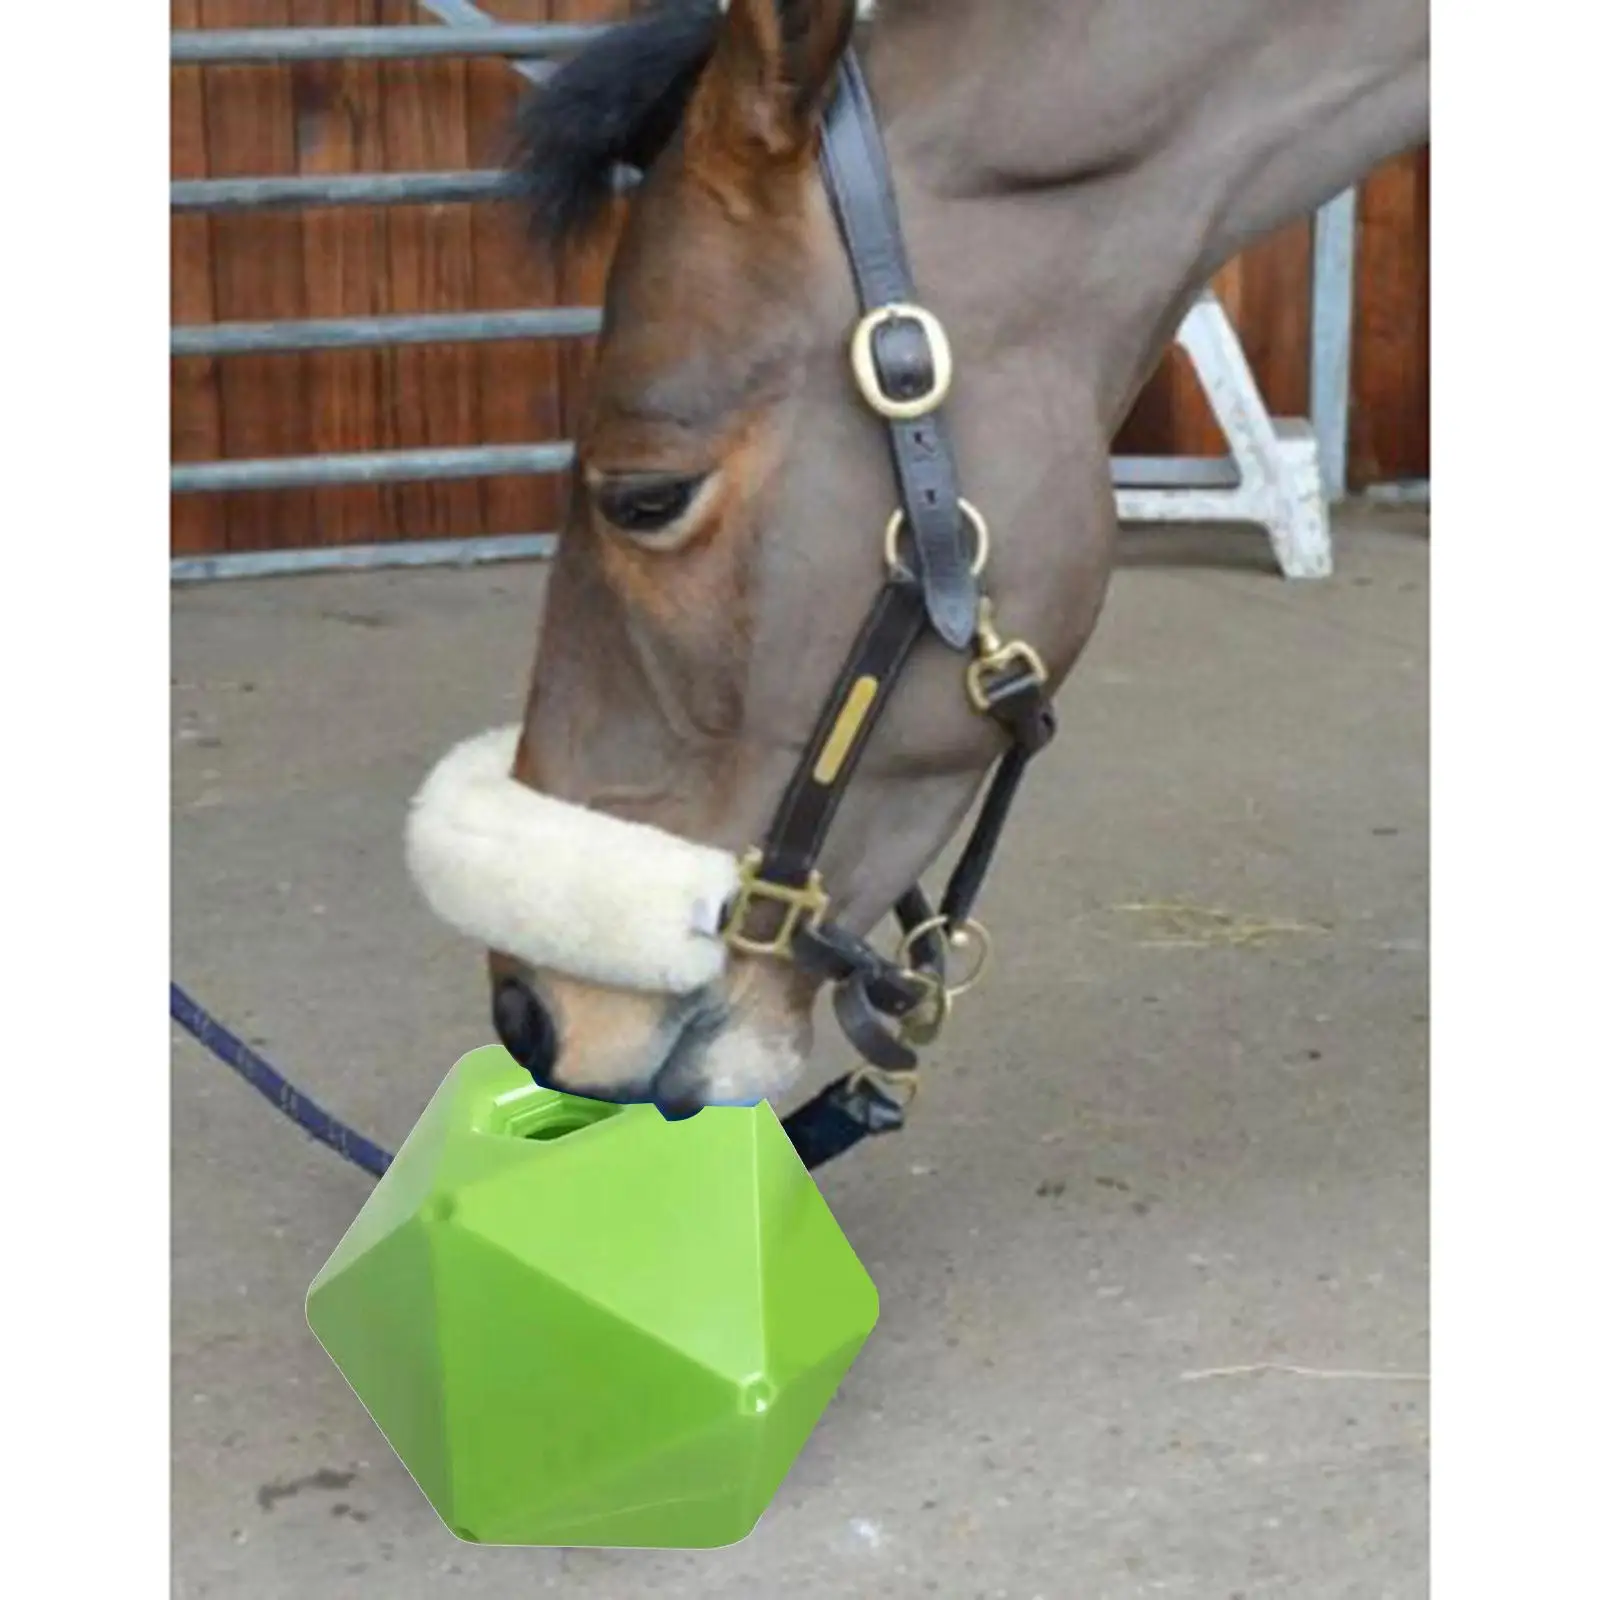 Funny Horse Treat Ball Feeding Toys Relieve Boredom Stress Feeder Stable Stall